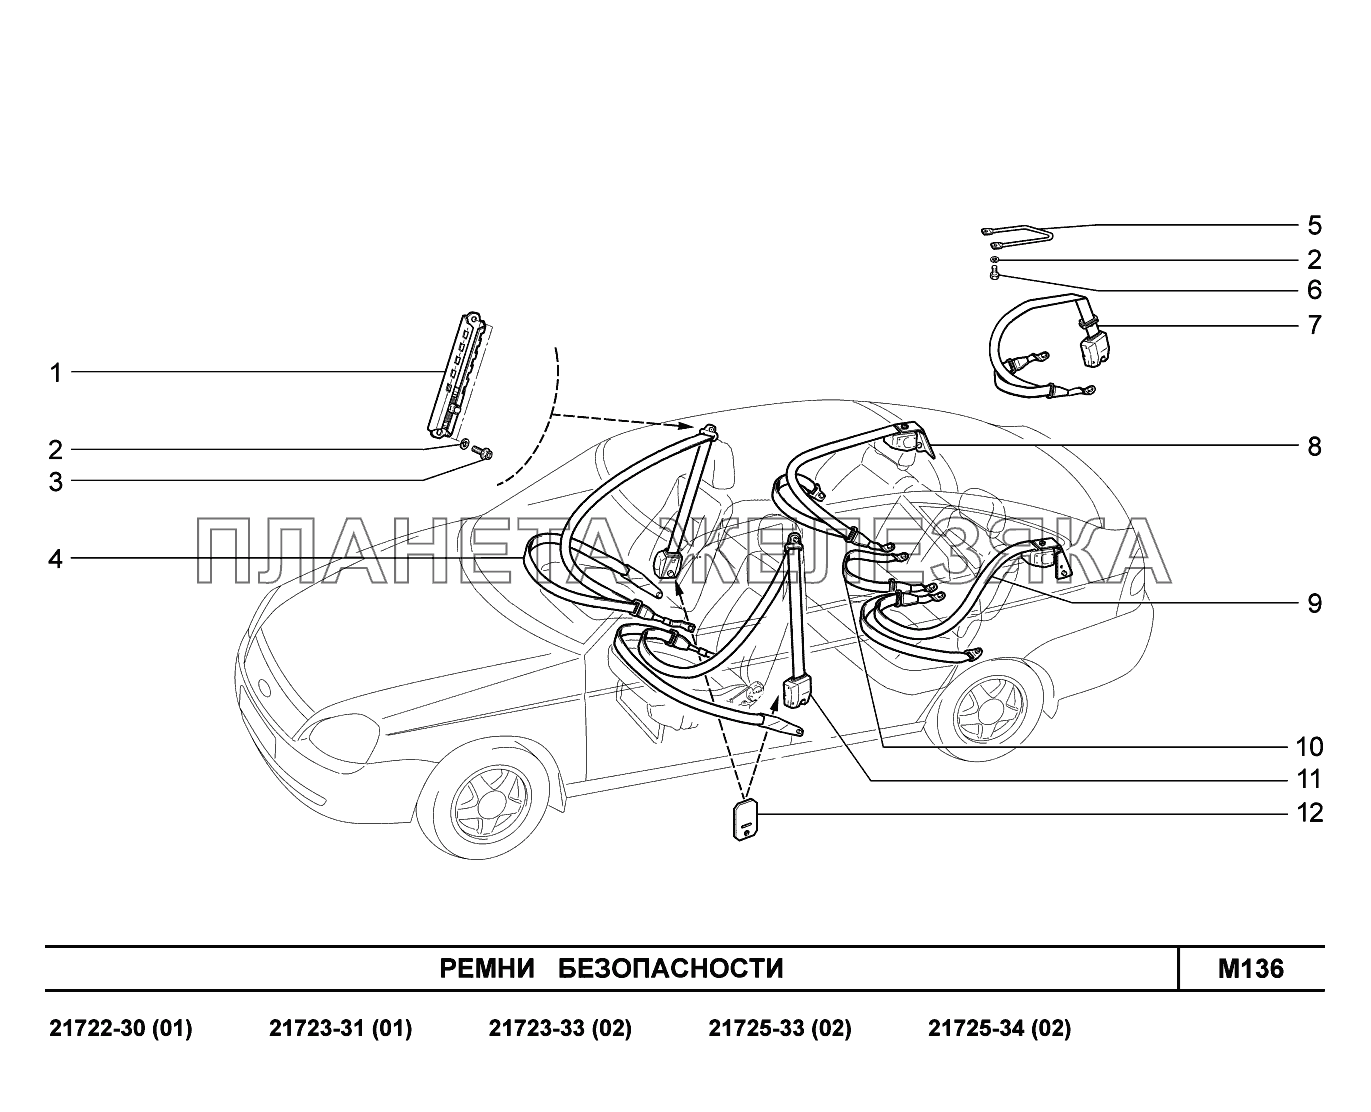 M136. Ремни безопасности ВАЗ-2170 